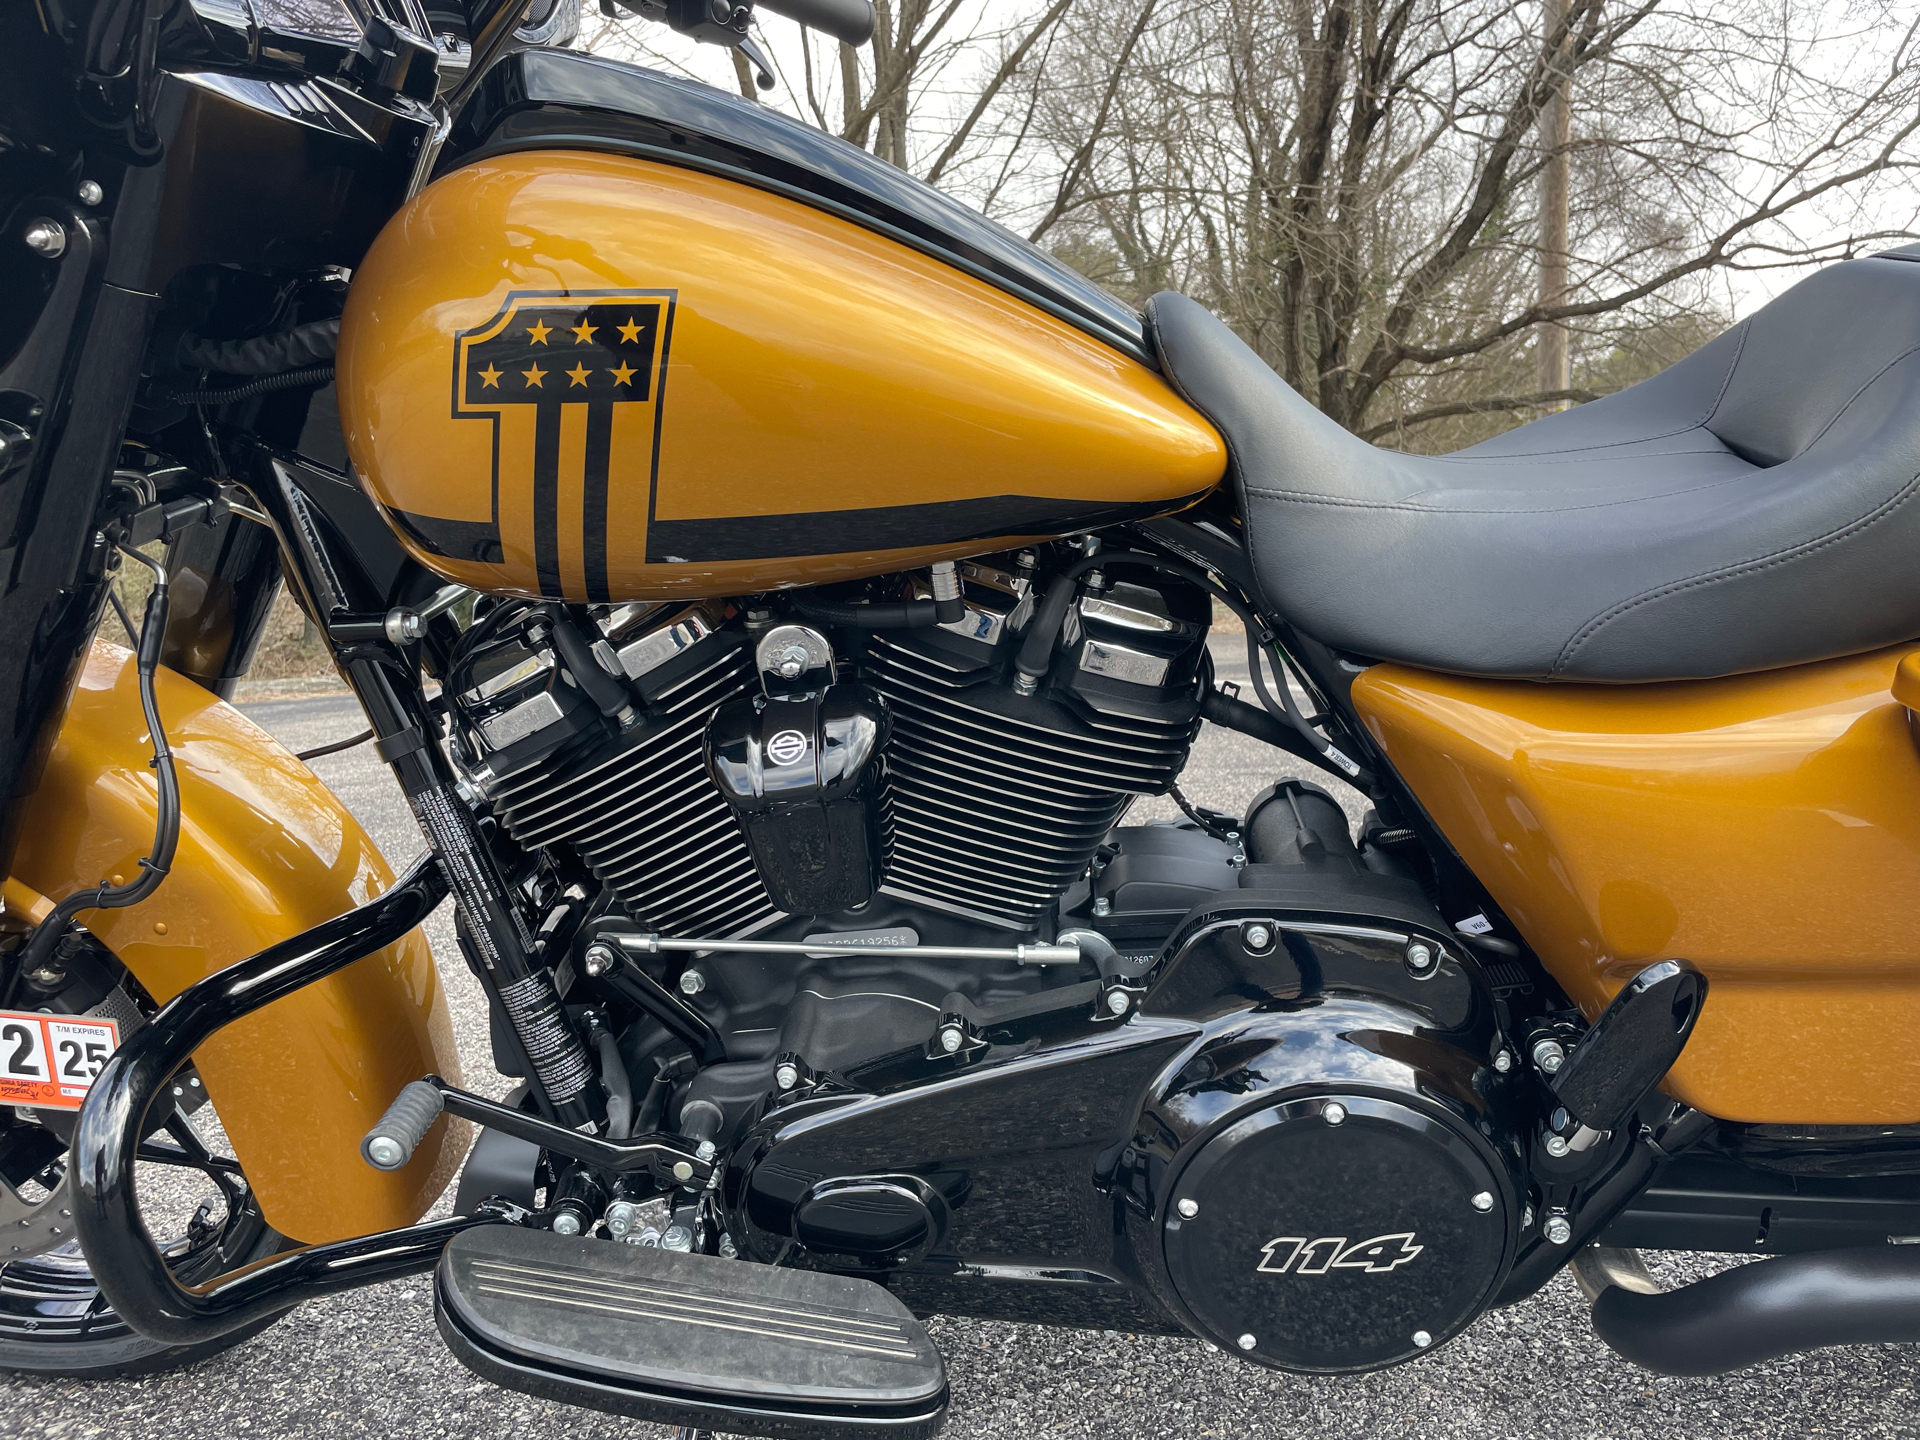 2023 Harley-Davidson Street Glide Special in Roanoke, Virginia - Photo 7